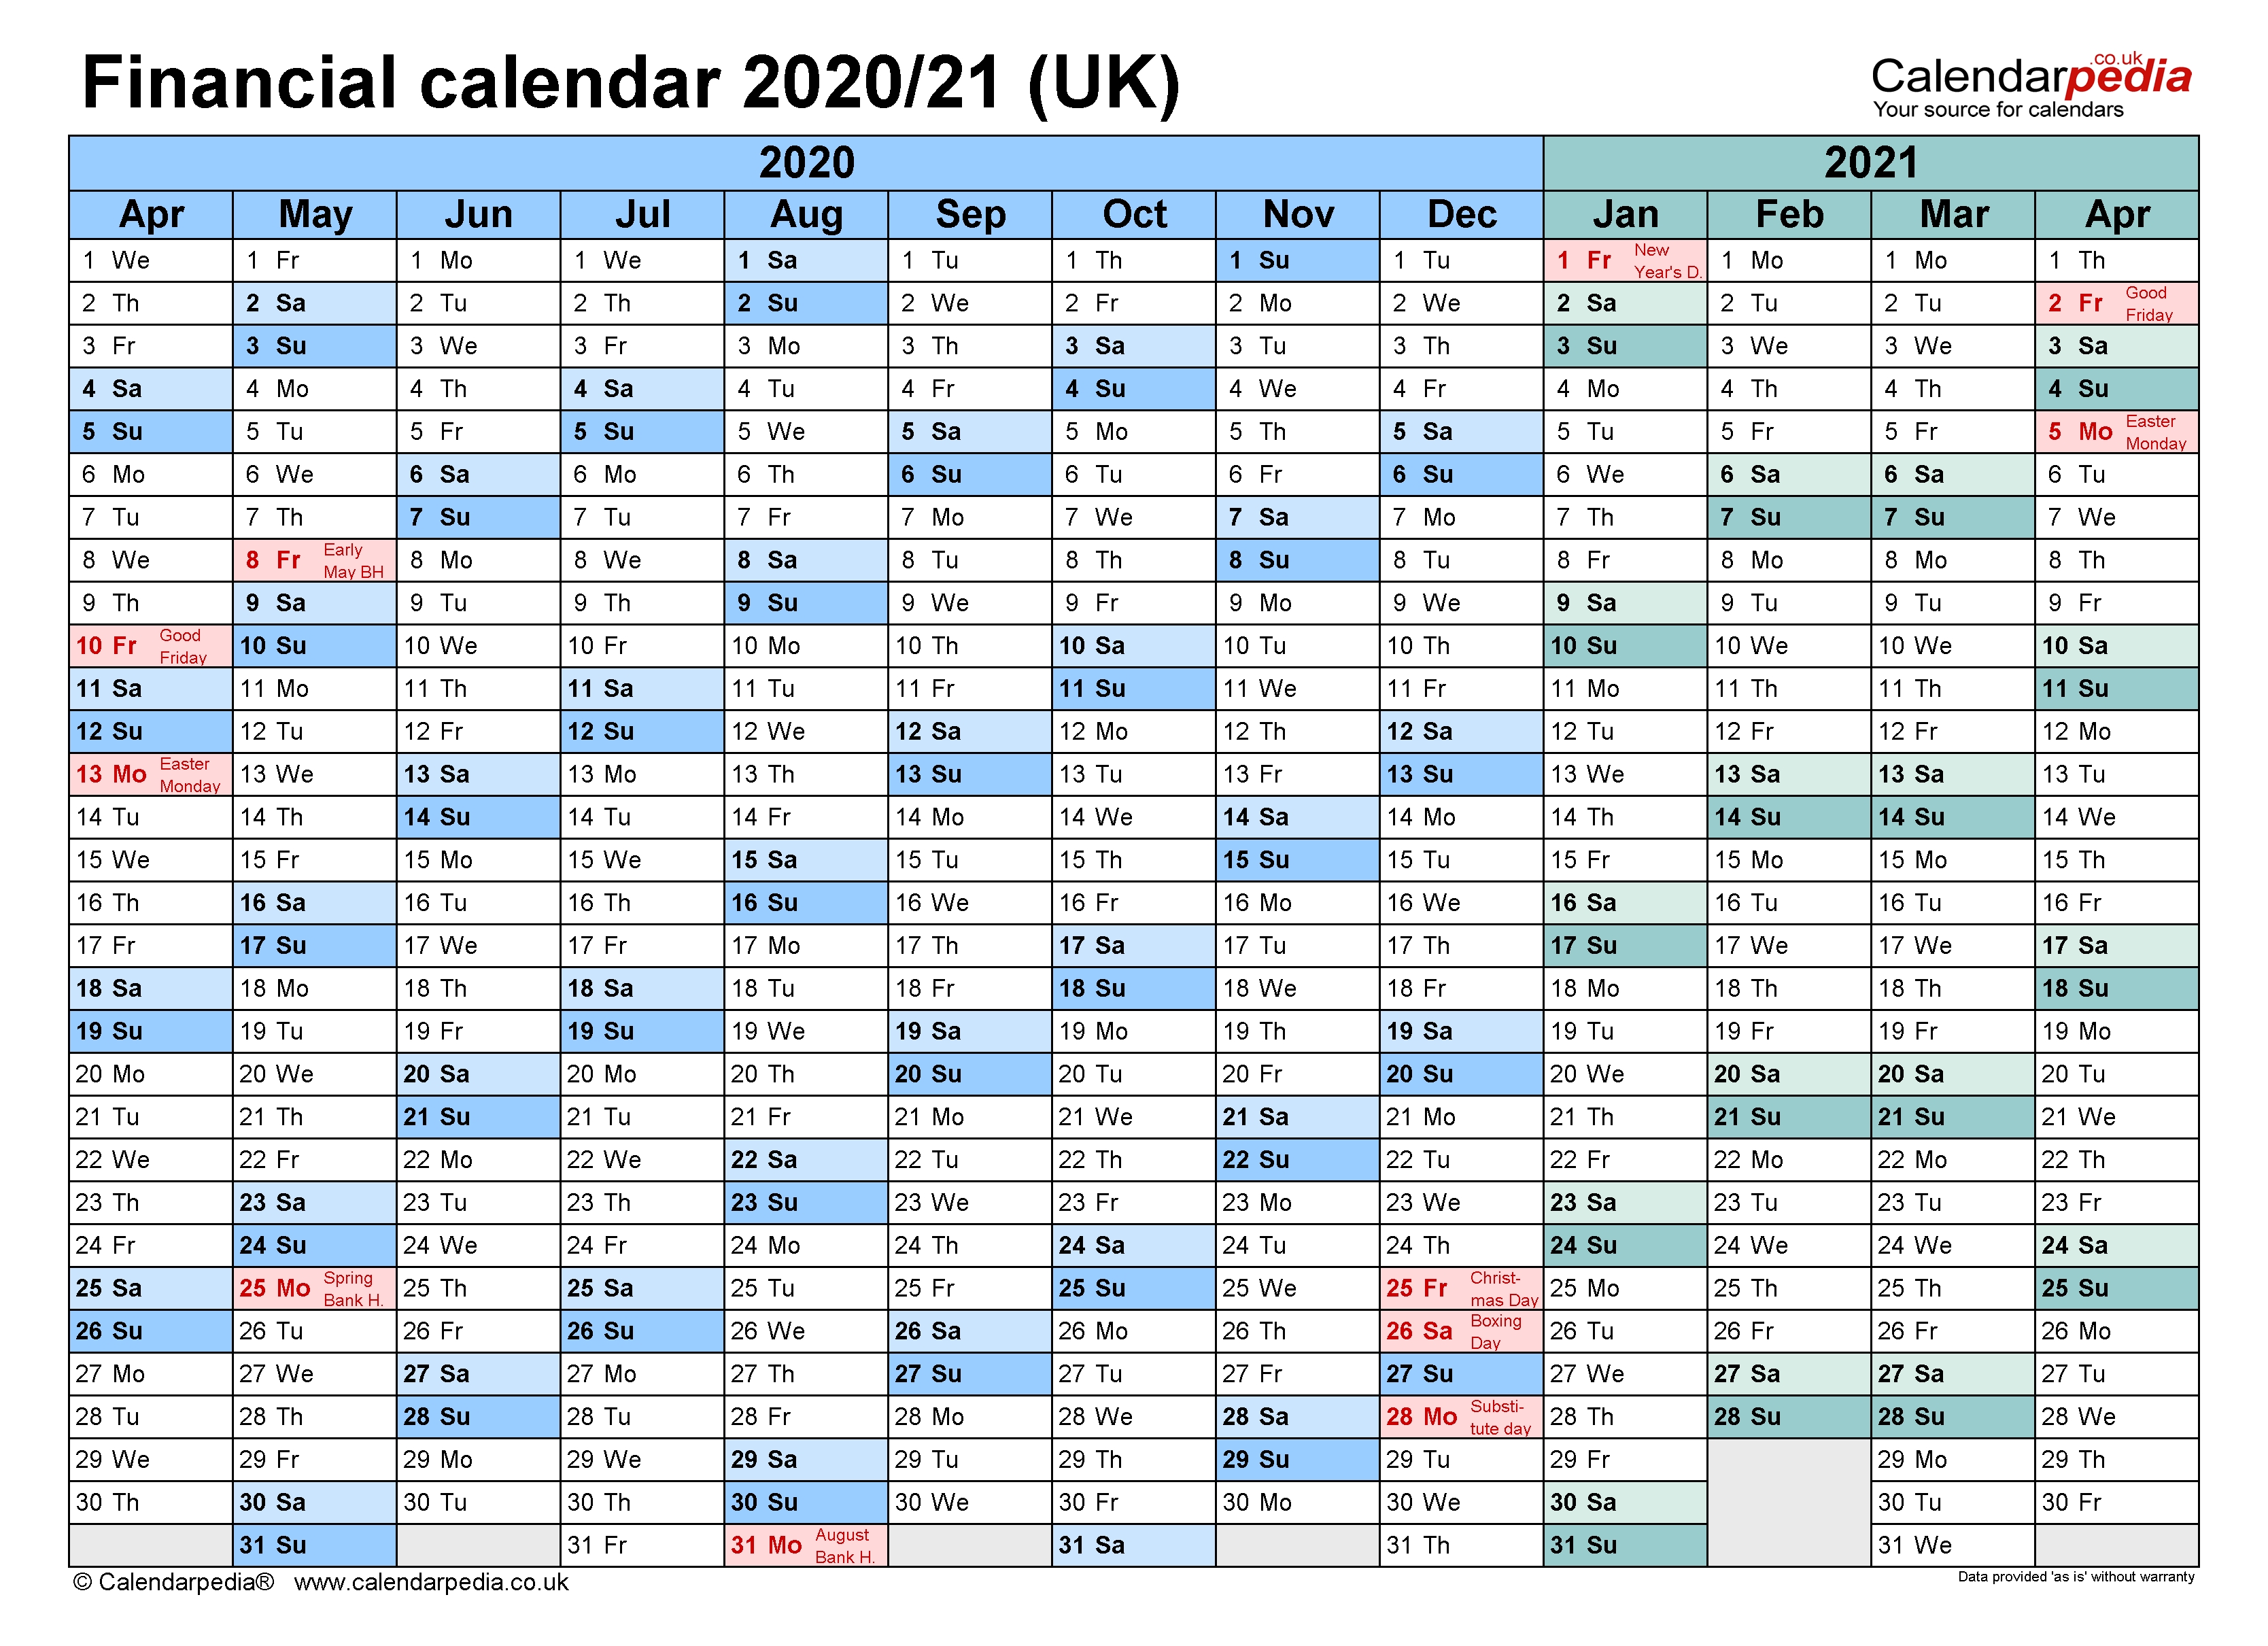 Financial Calendars 2020/21 Uk In Pdf Format Financial Calendar 2021/21 Excel